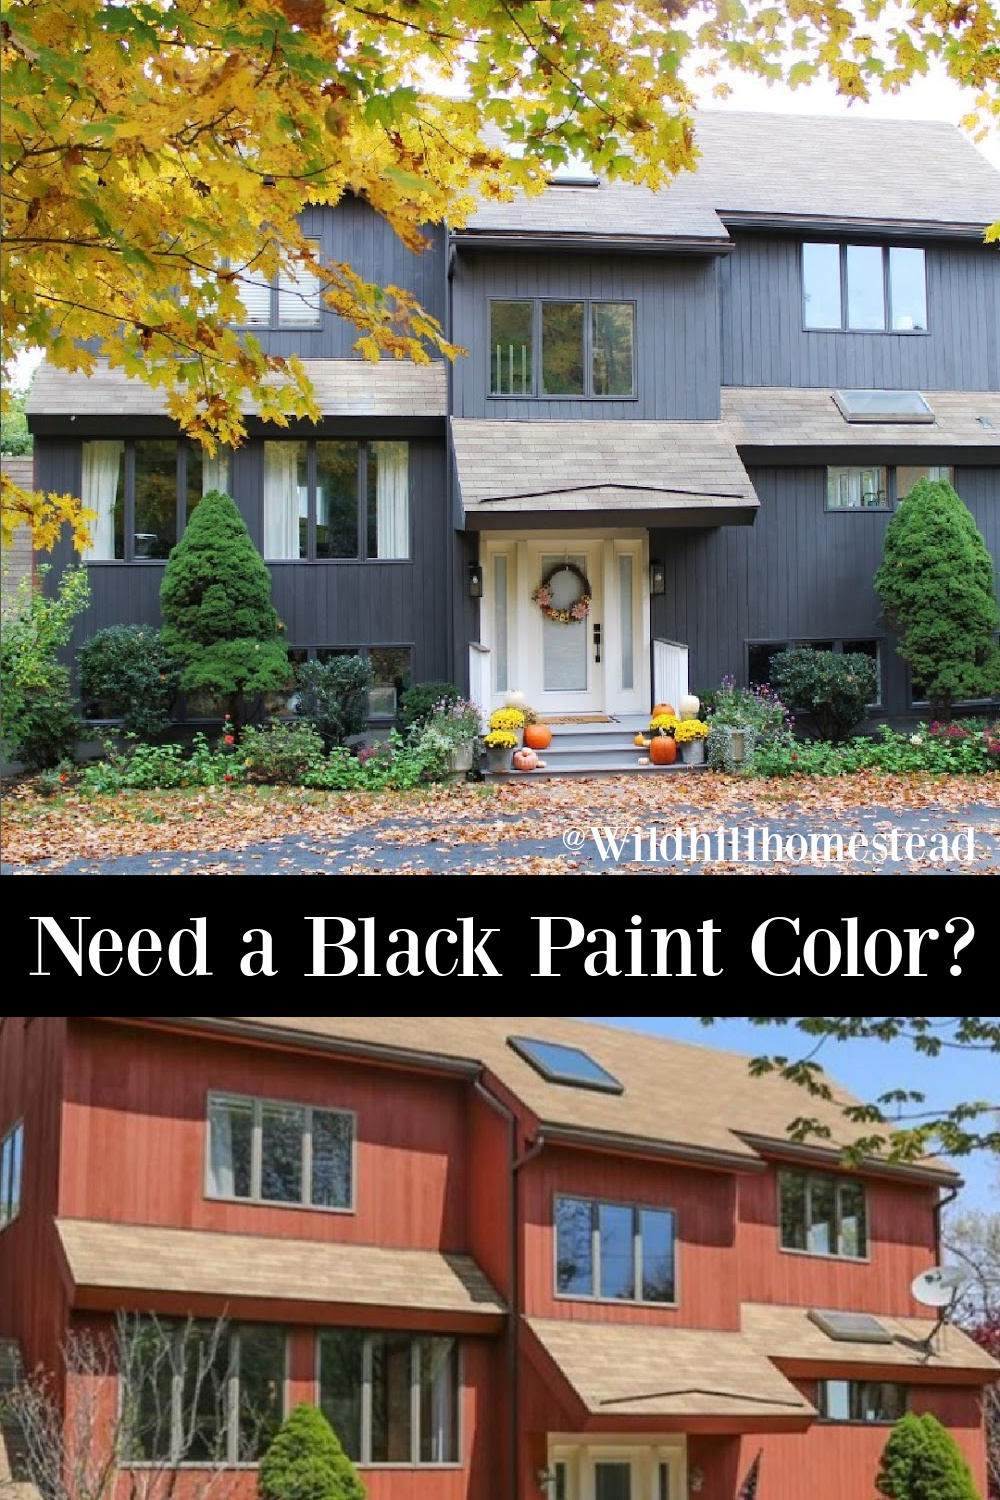 Benjamin Moore Iron Mountain paint color on a house exterior - @wildhillhomestead. #benjaminmooreironmountain #blackpaintcolors